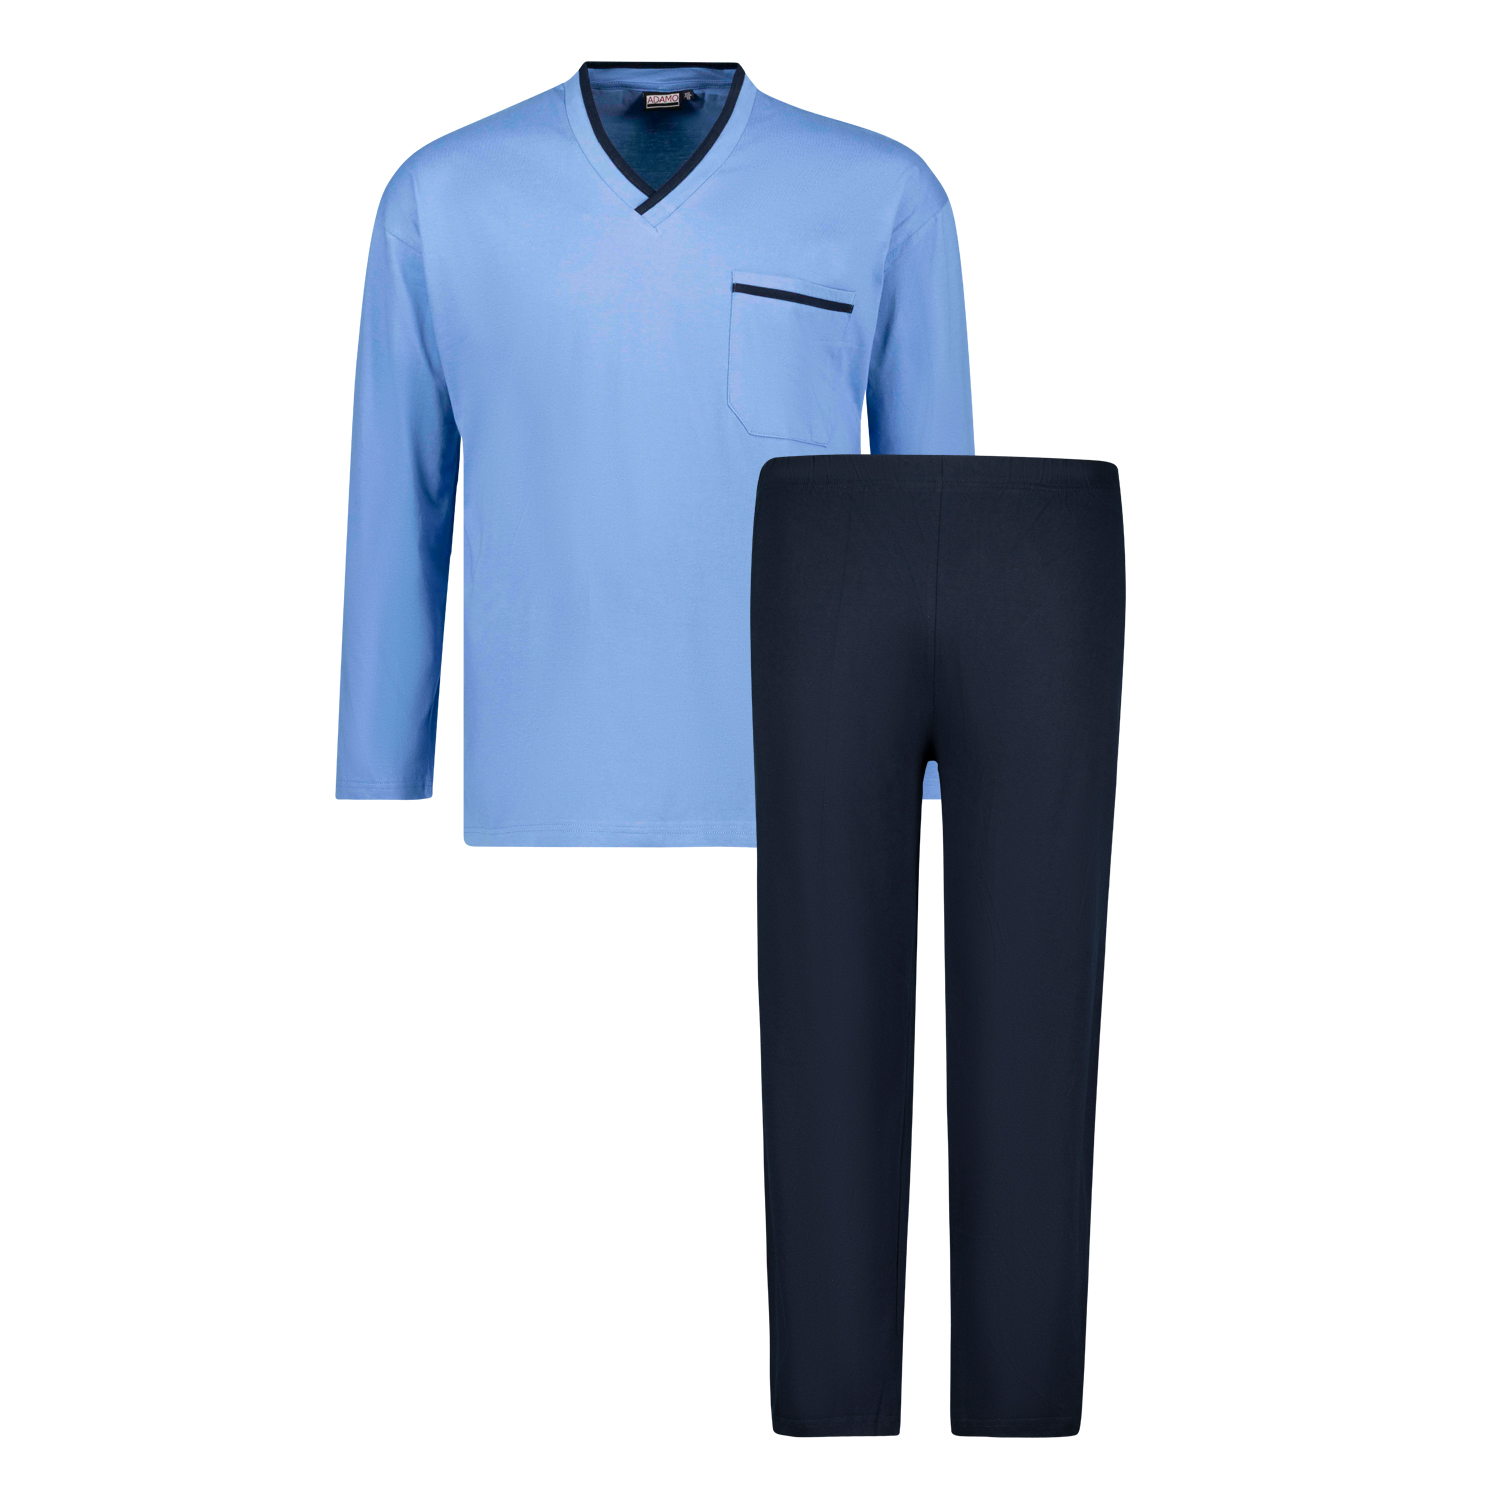 Long pyjama in light blue by Adamo in oversizes 2XL-10XL and 98-122